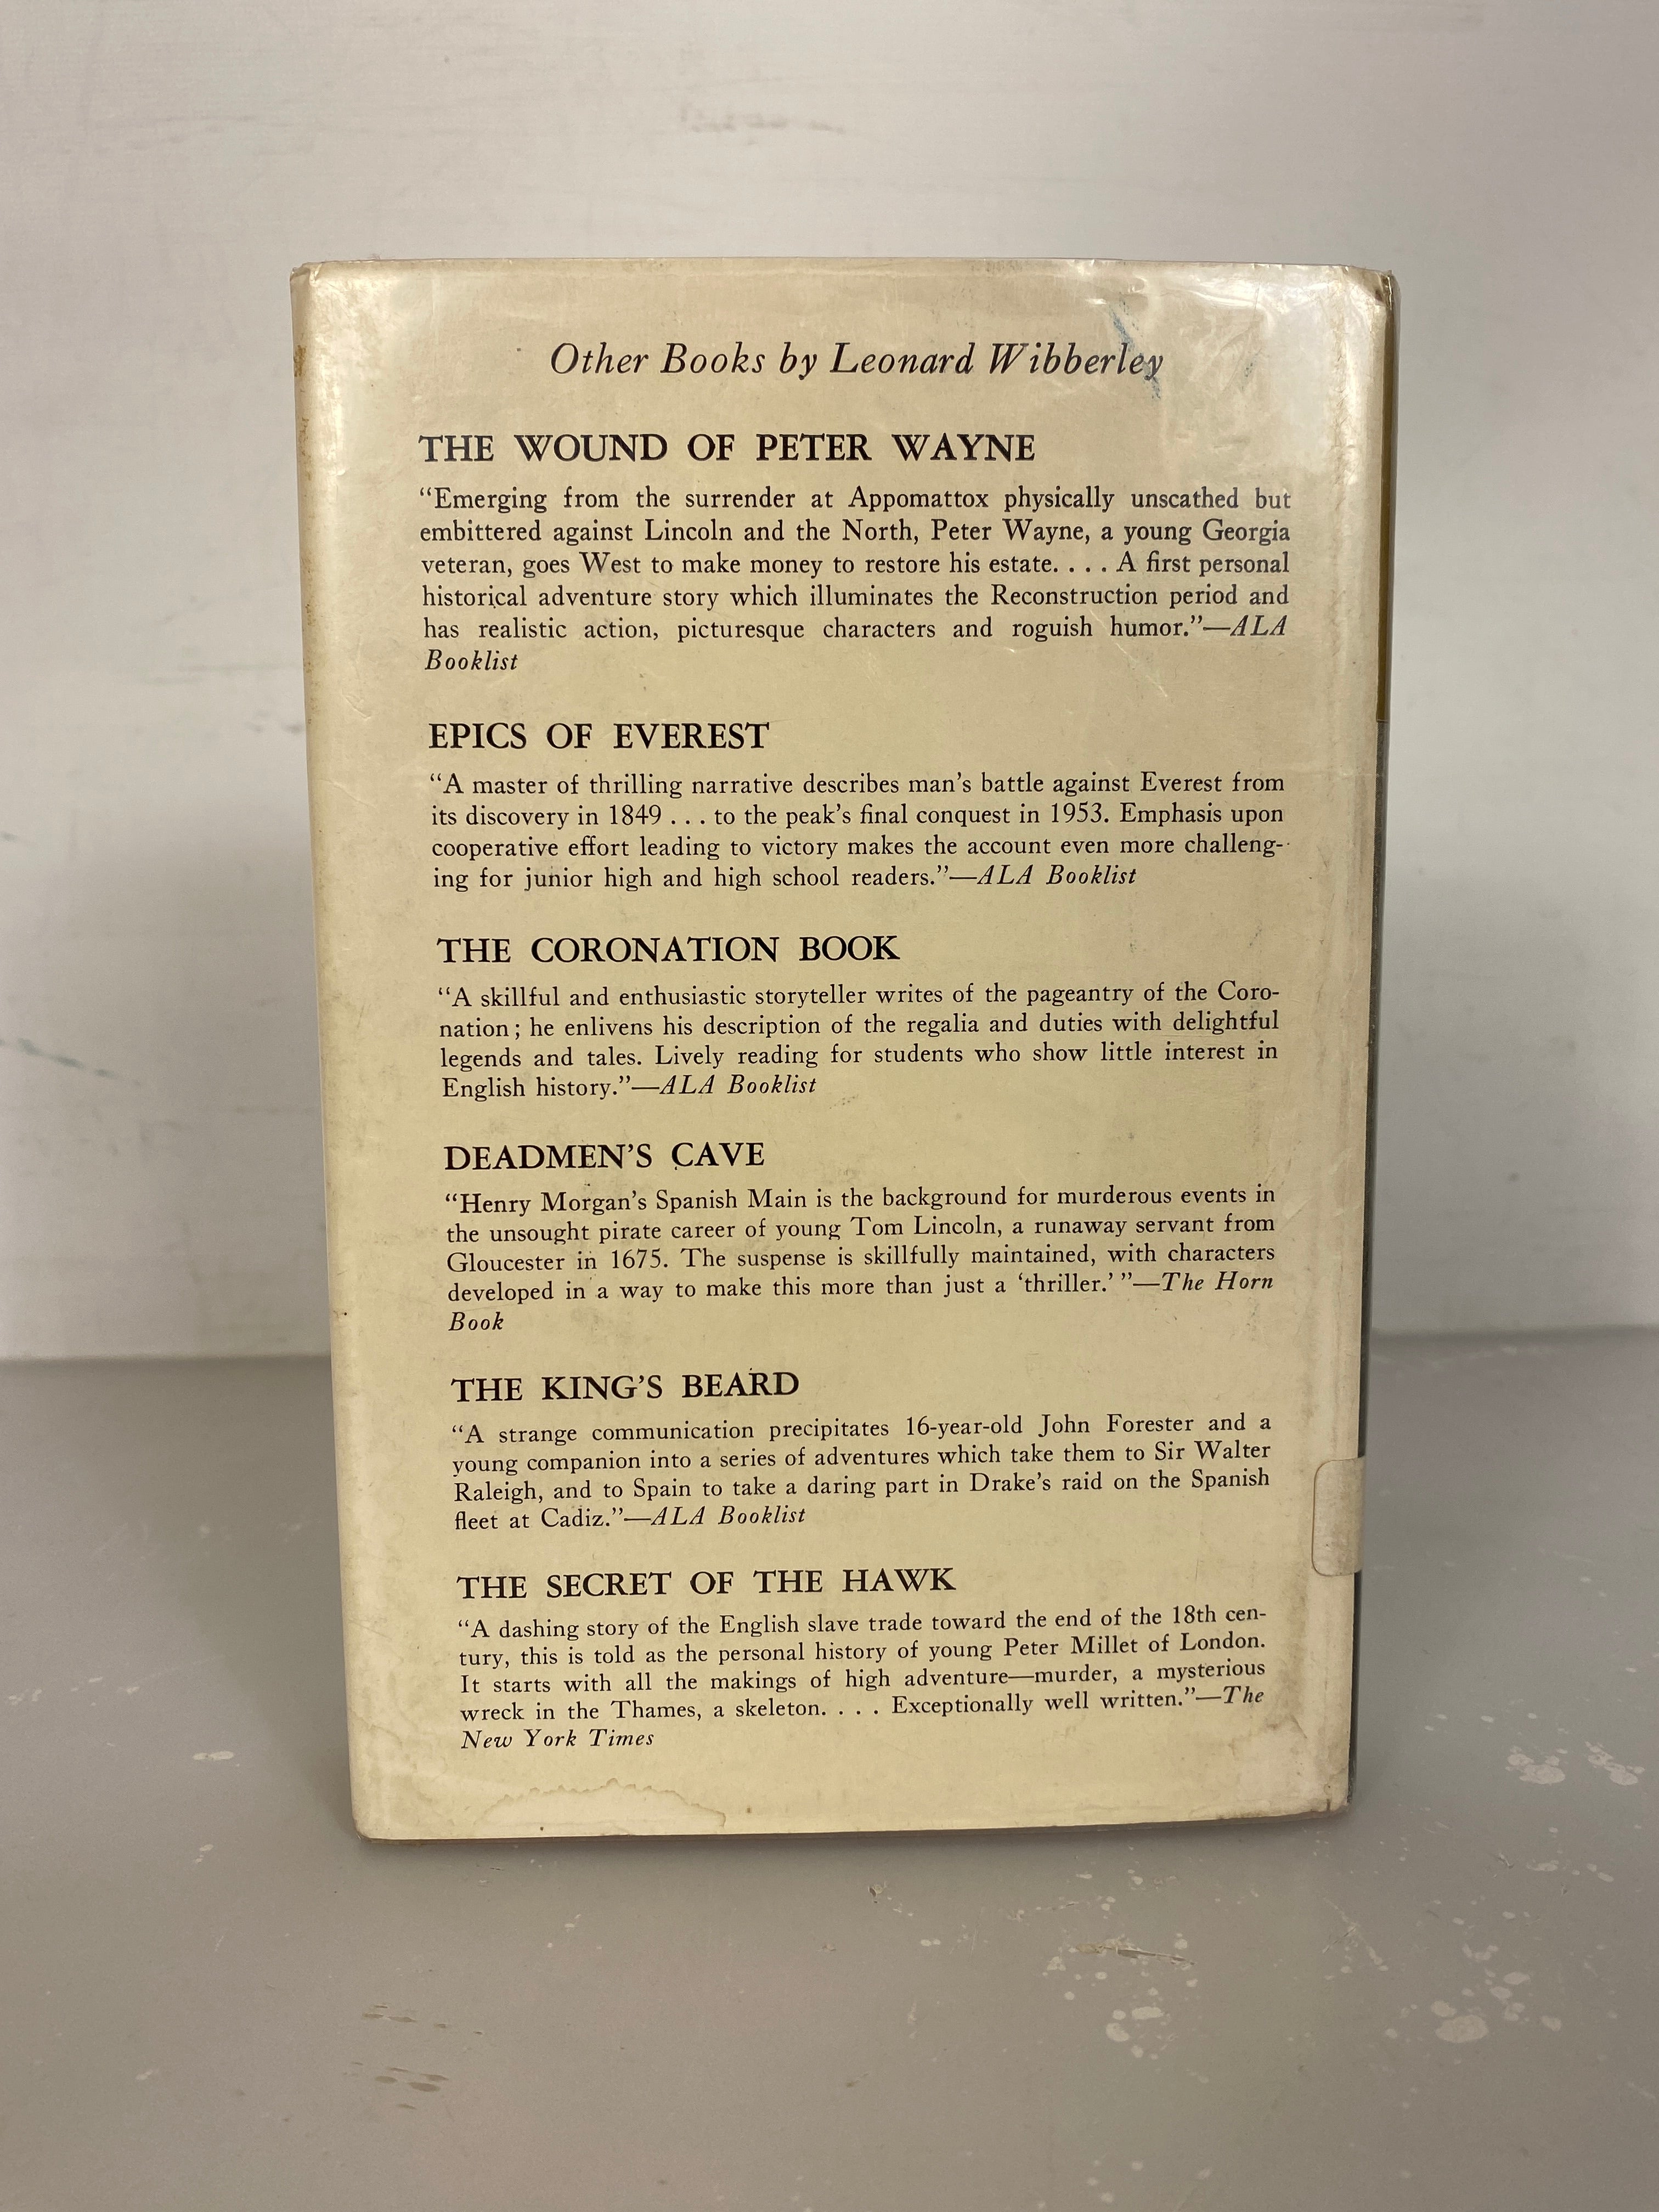 Rare First Printing The Life of Winston Churchill by Leonard Wibberley 1956 HC DJ